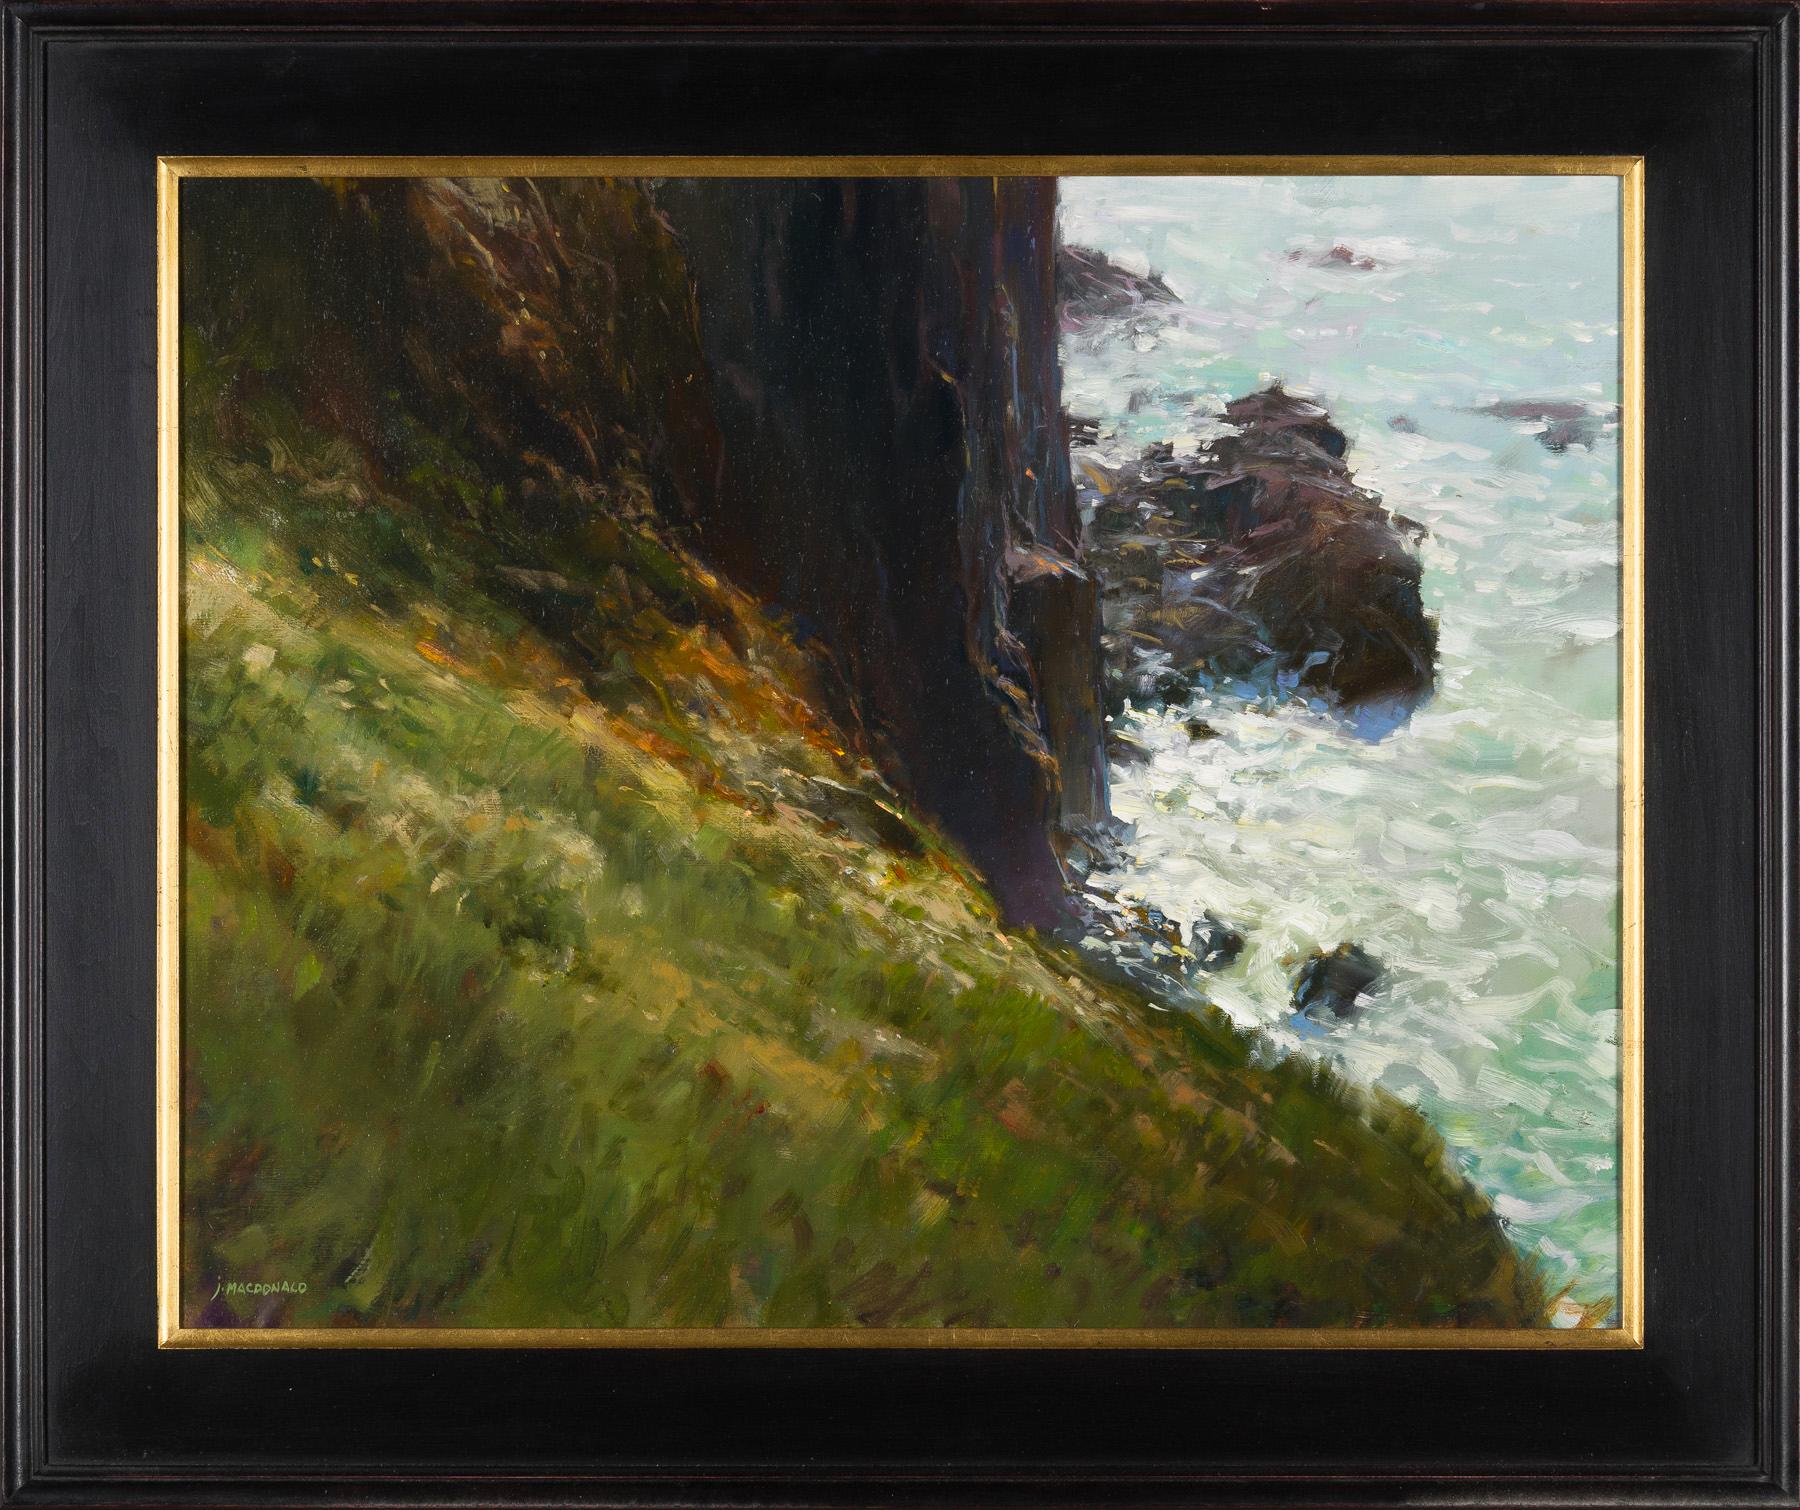 Water and Rock - Painting by John MacDonald